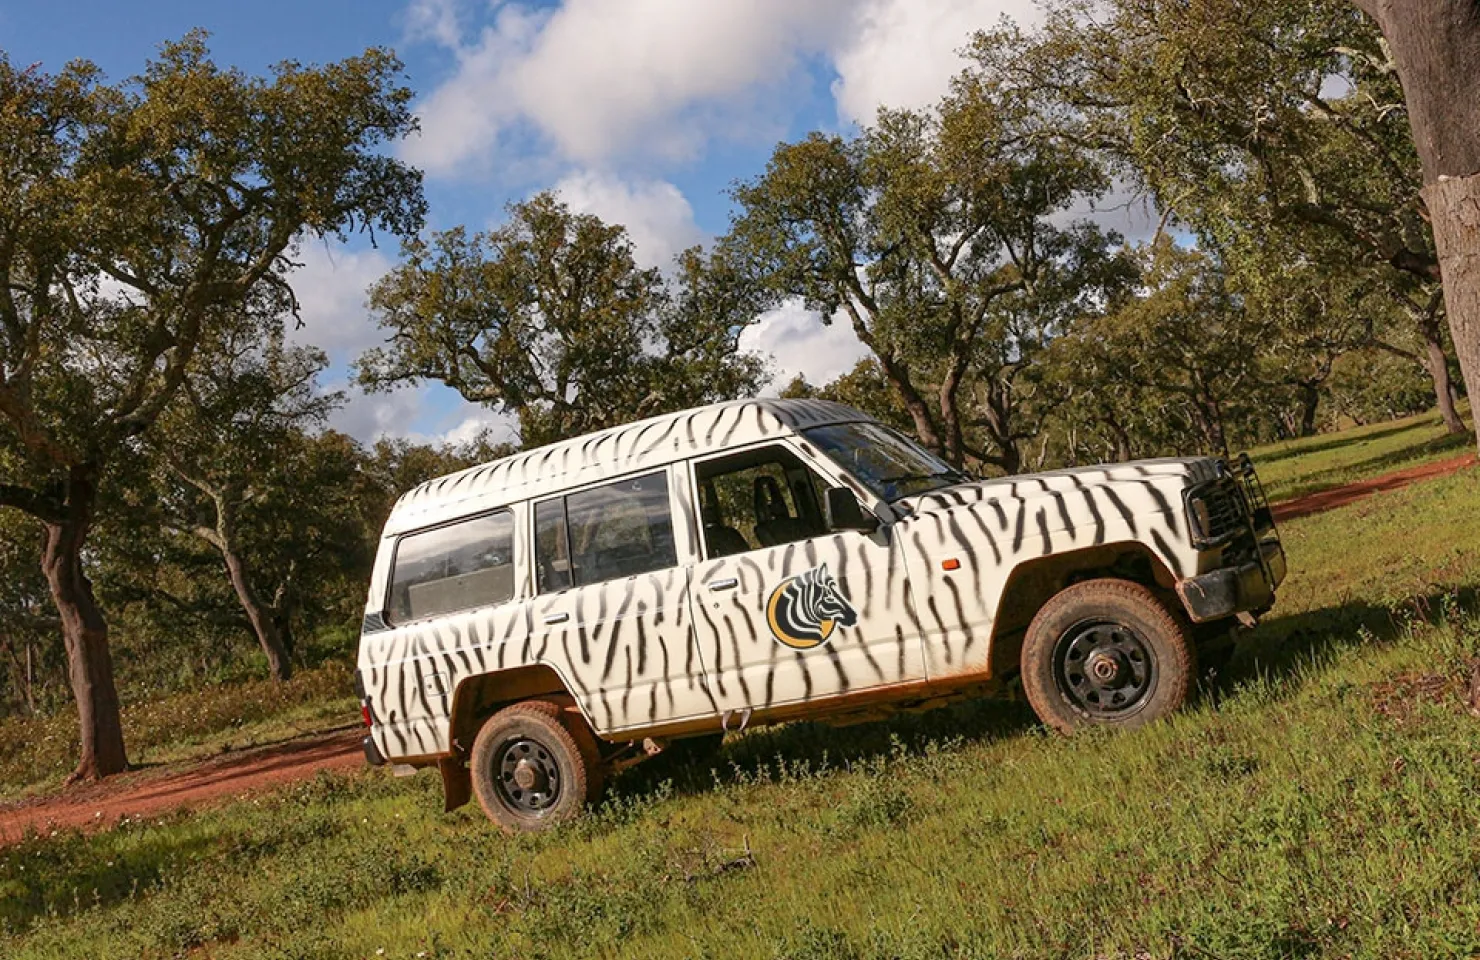 Full-Day Jeep Safari Adventure by Zebra Safari - Family Activities in Albufeira